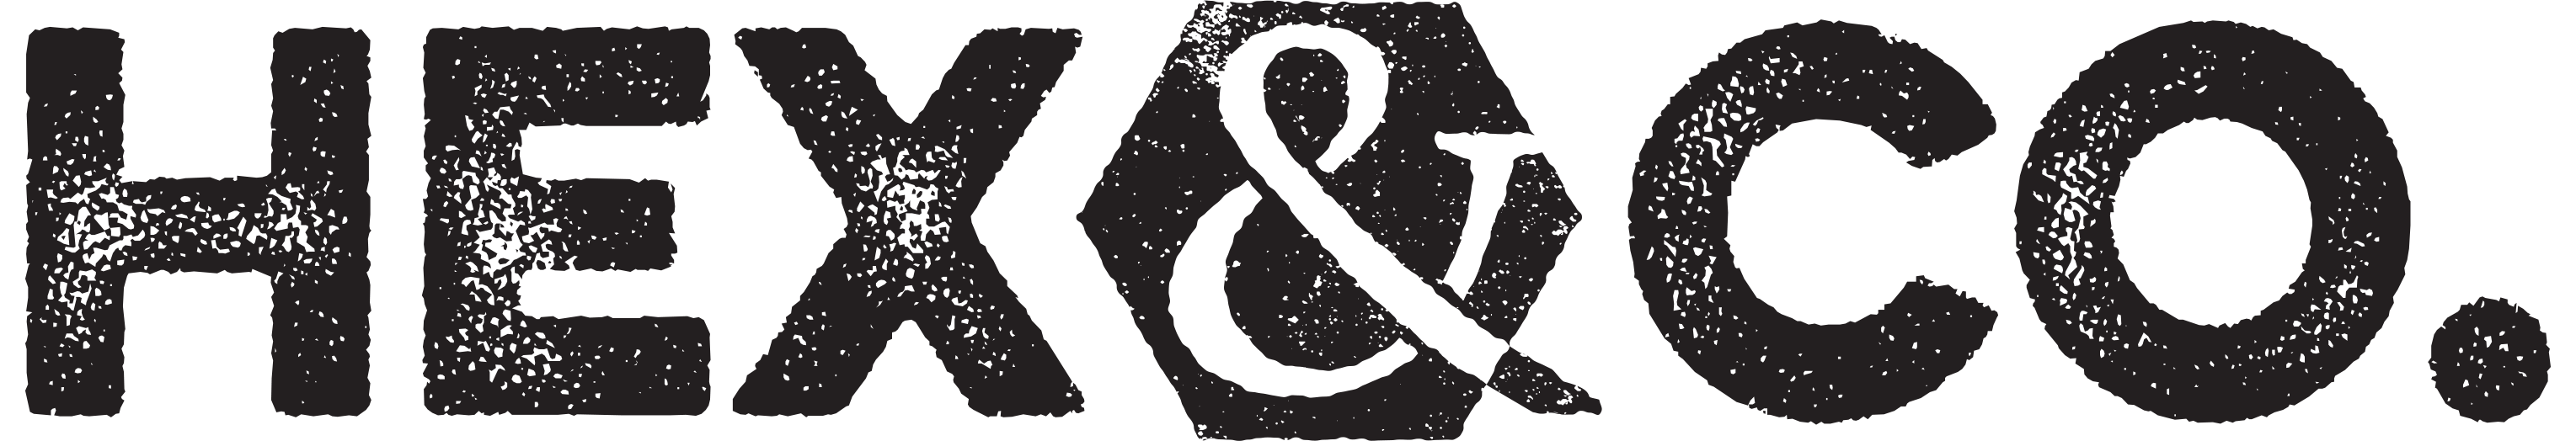 Hex&Co. logo